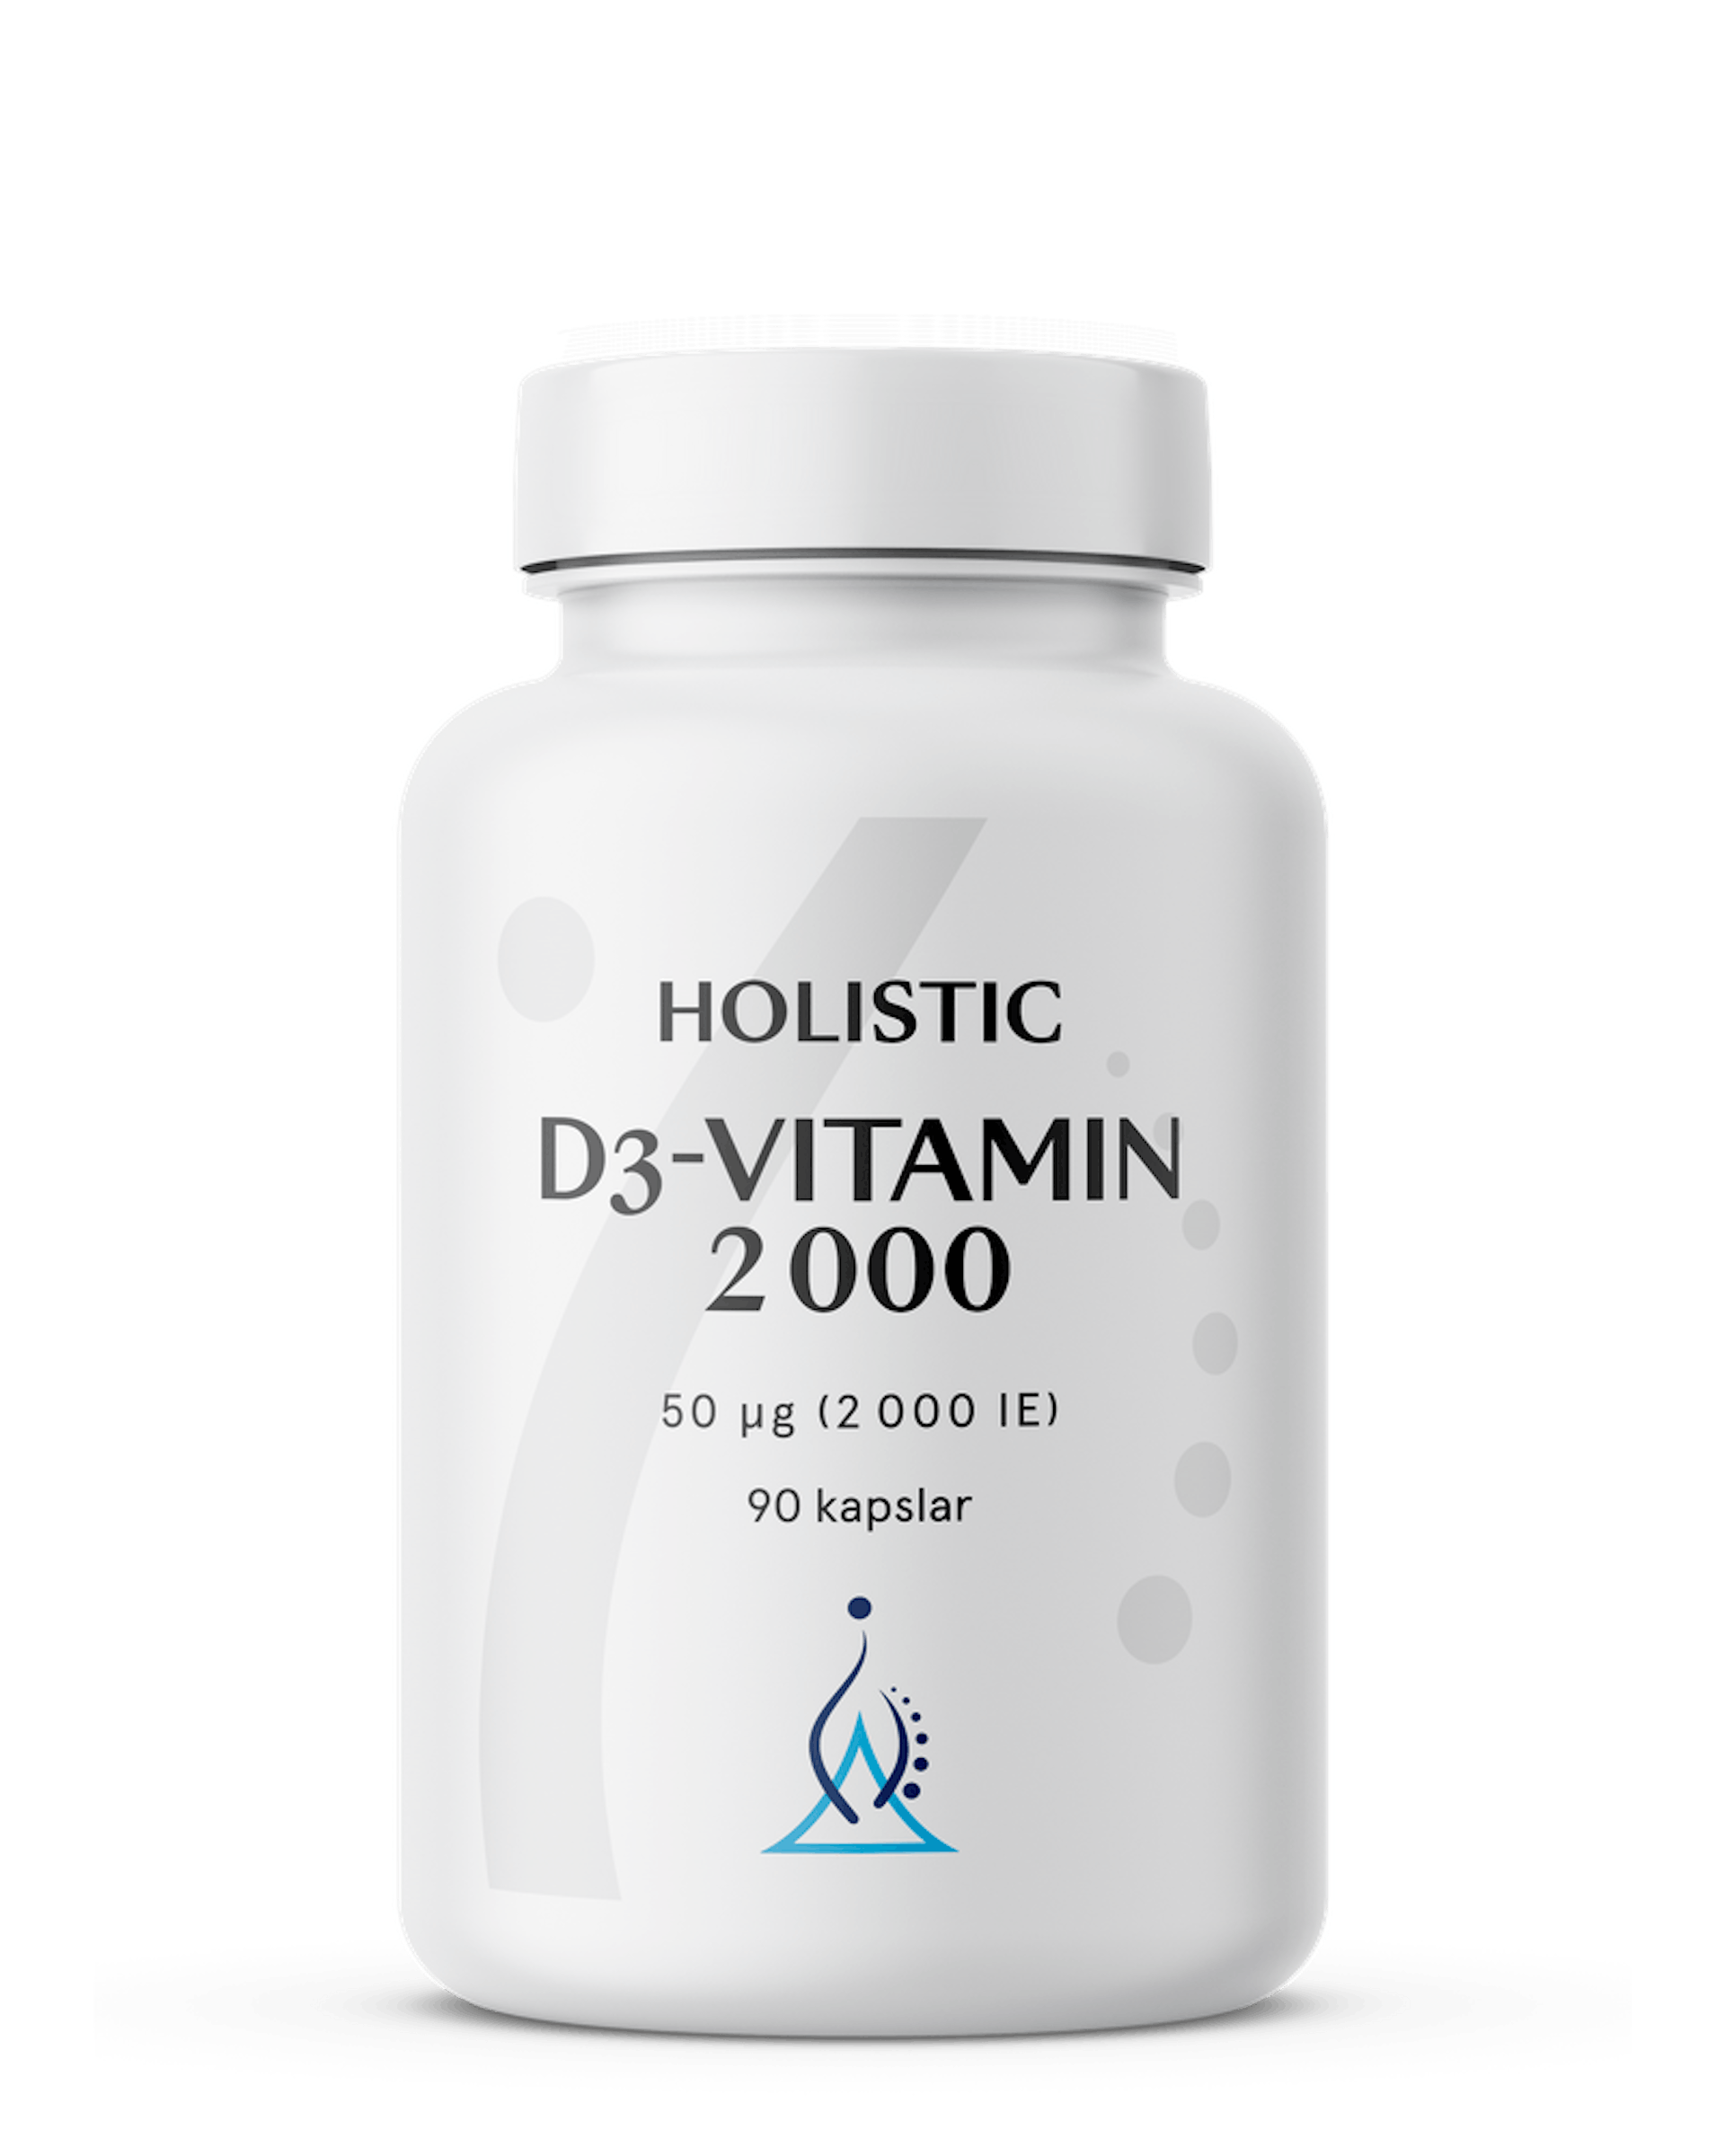 D3-vitamin 2000, 90 kapslar (1 av 1)